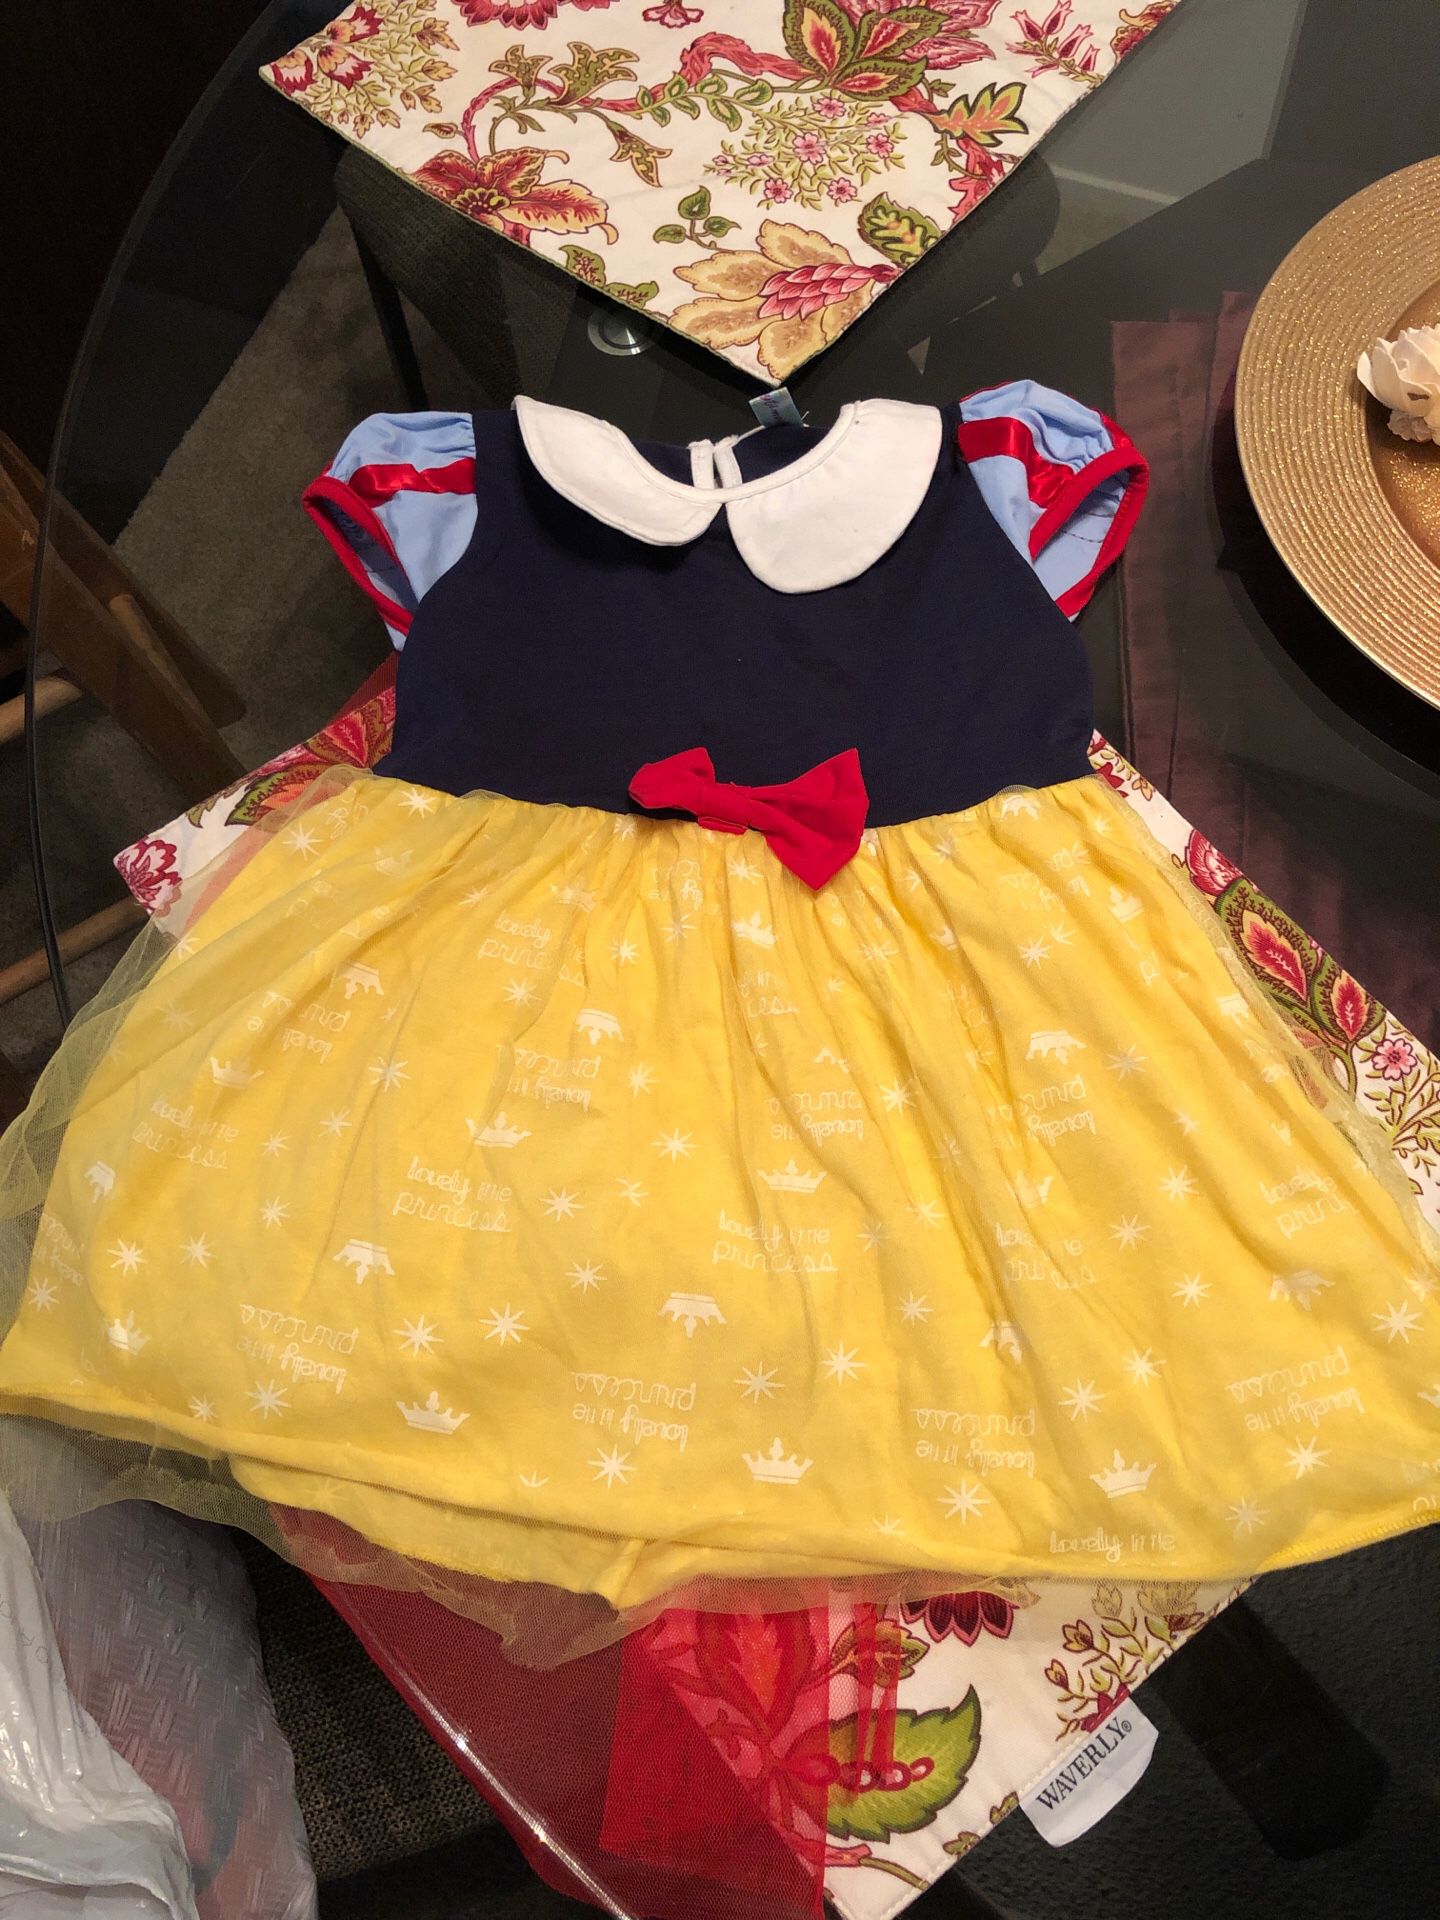 Snow White costume dress